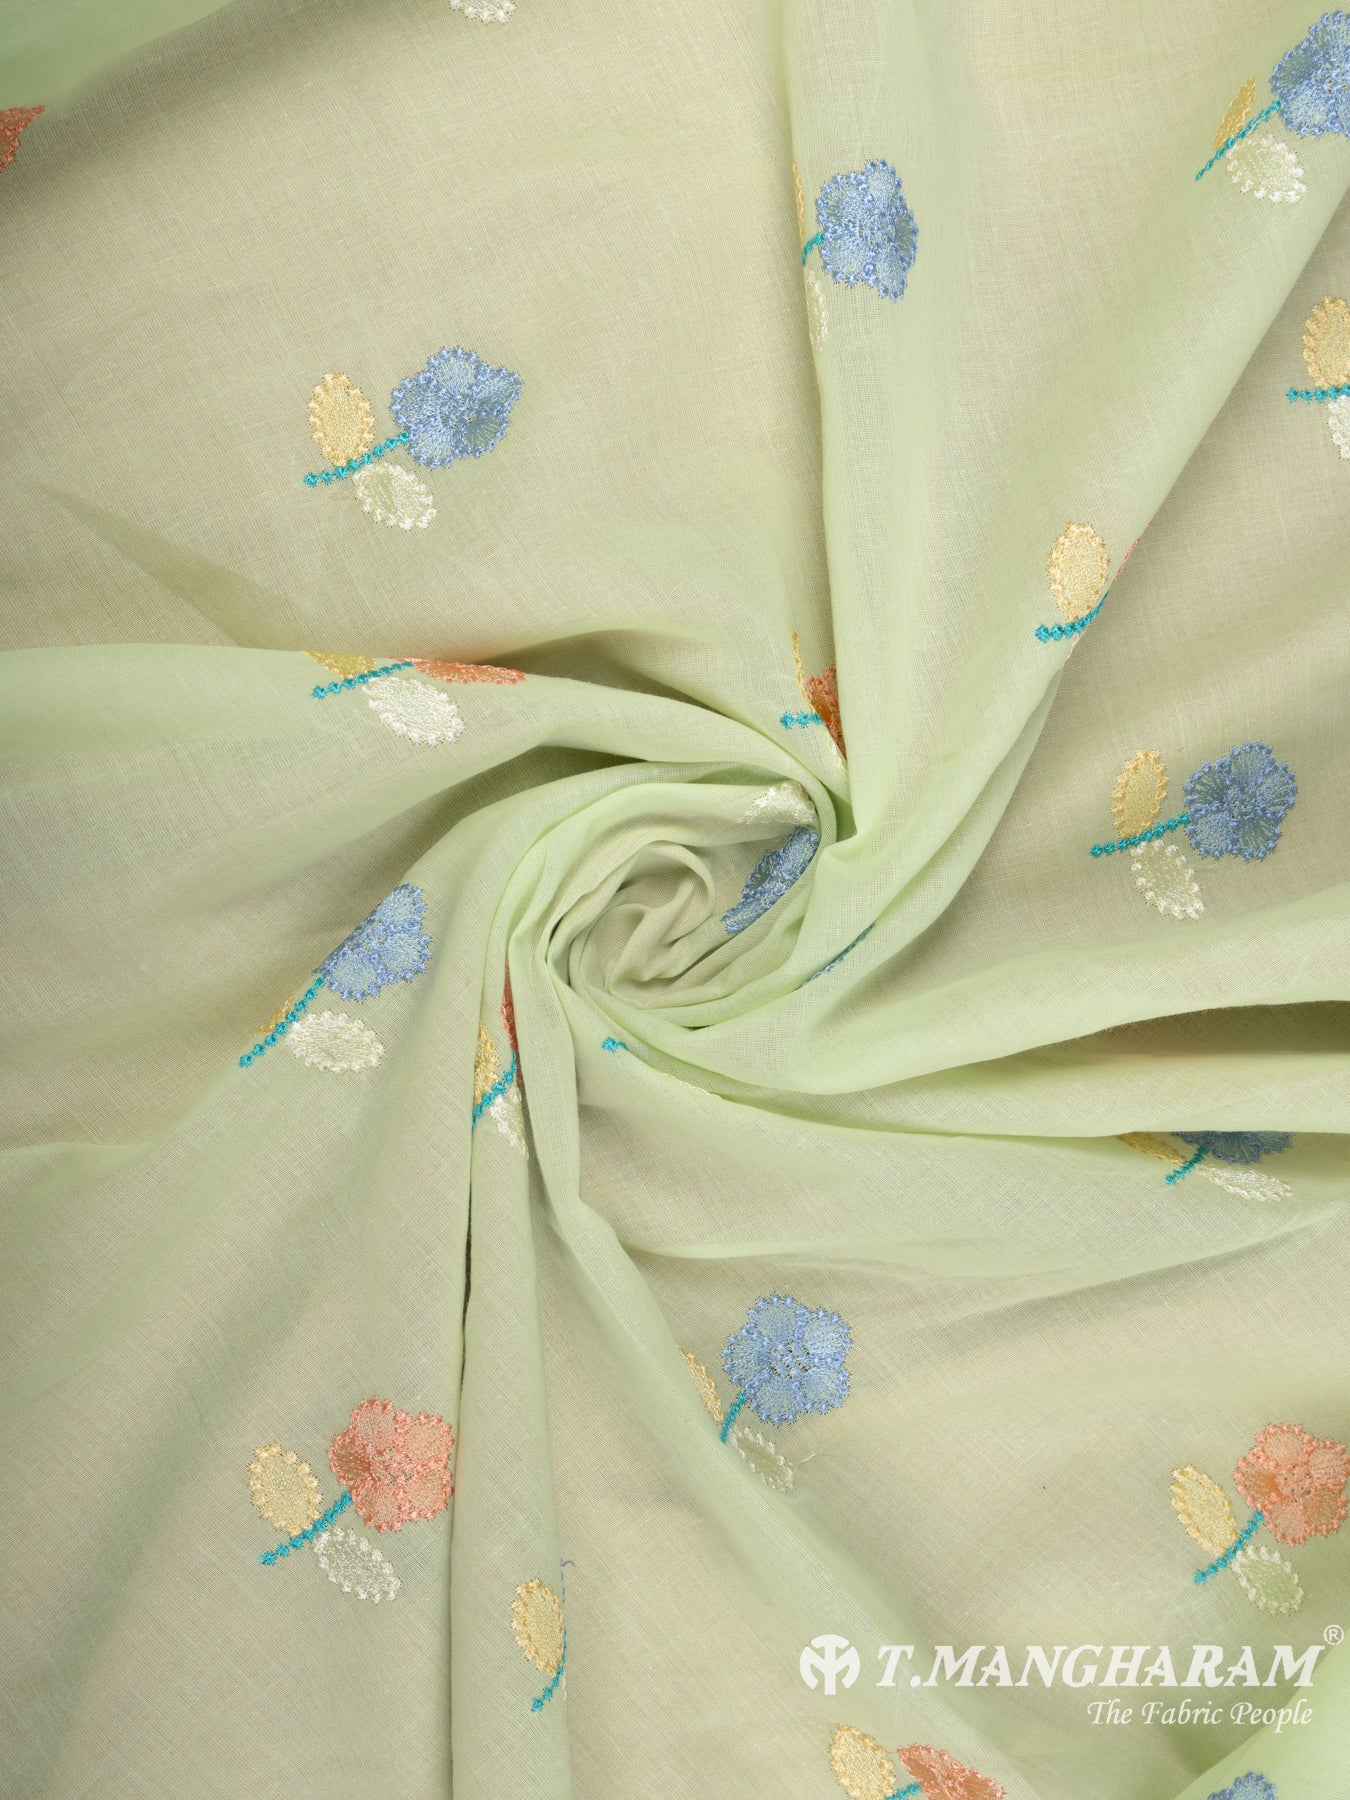 Dark Green Fancy Net Fabric - EB0171 – Tmangharam - The Fabric People